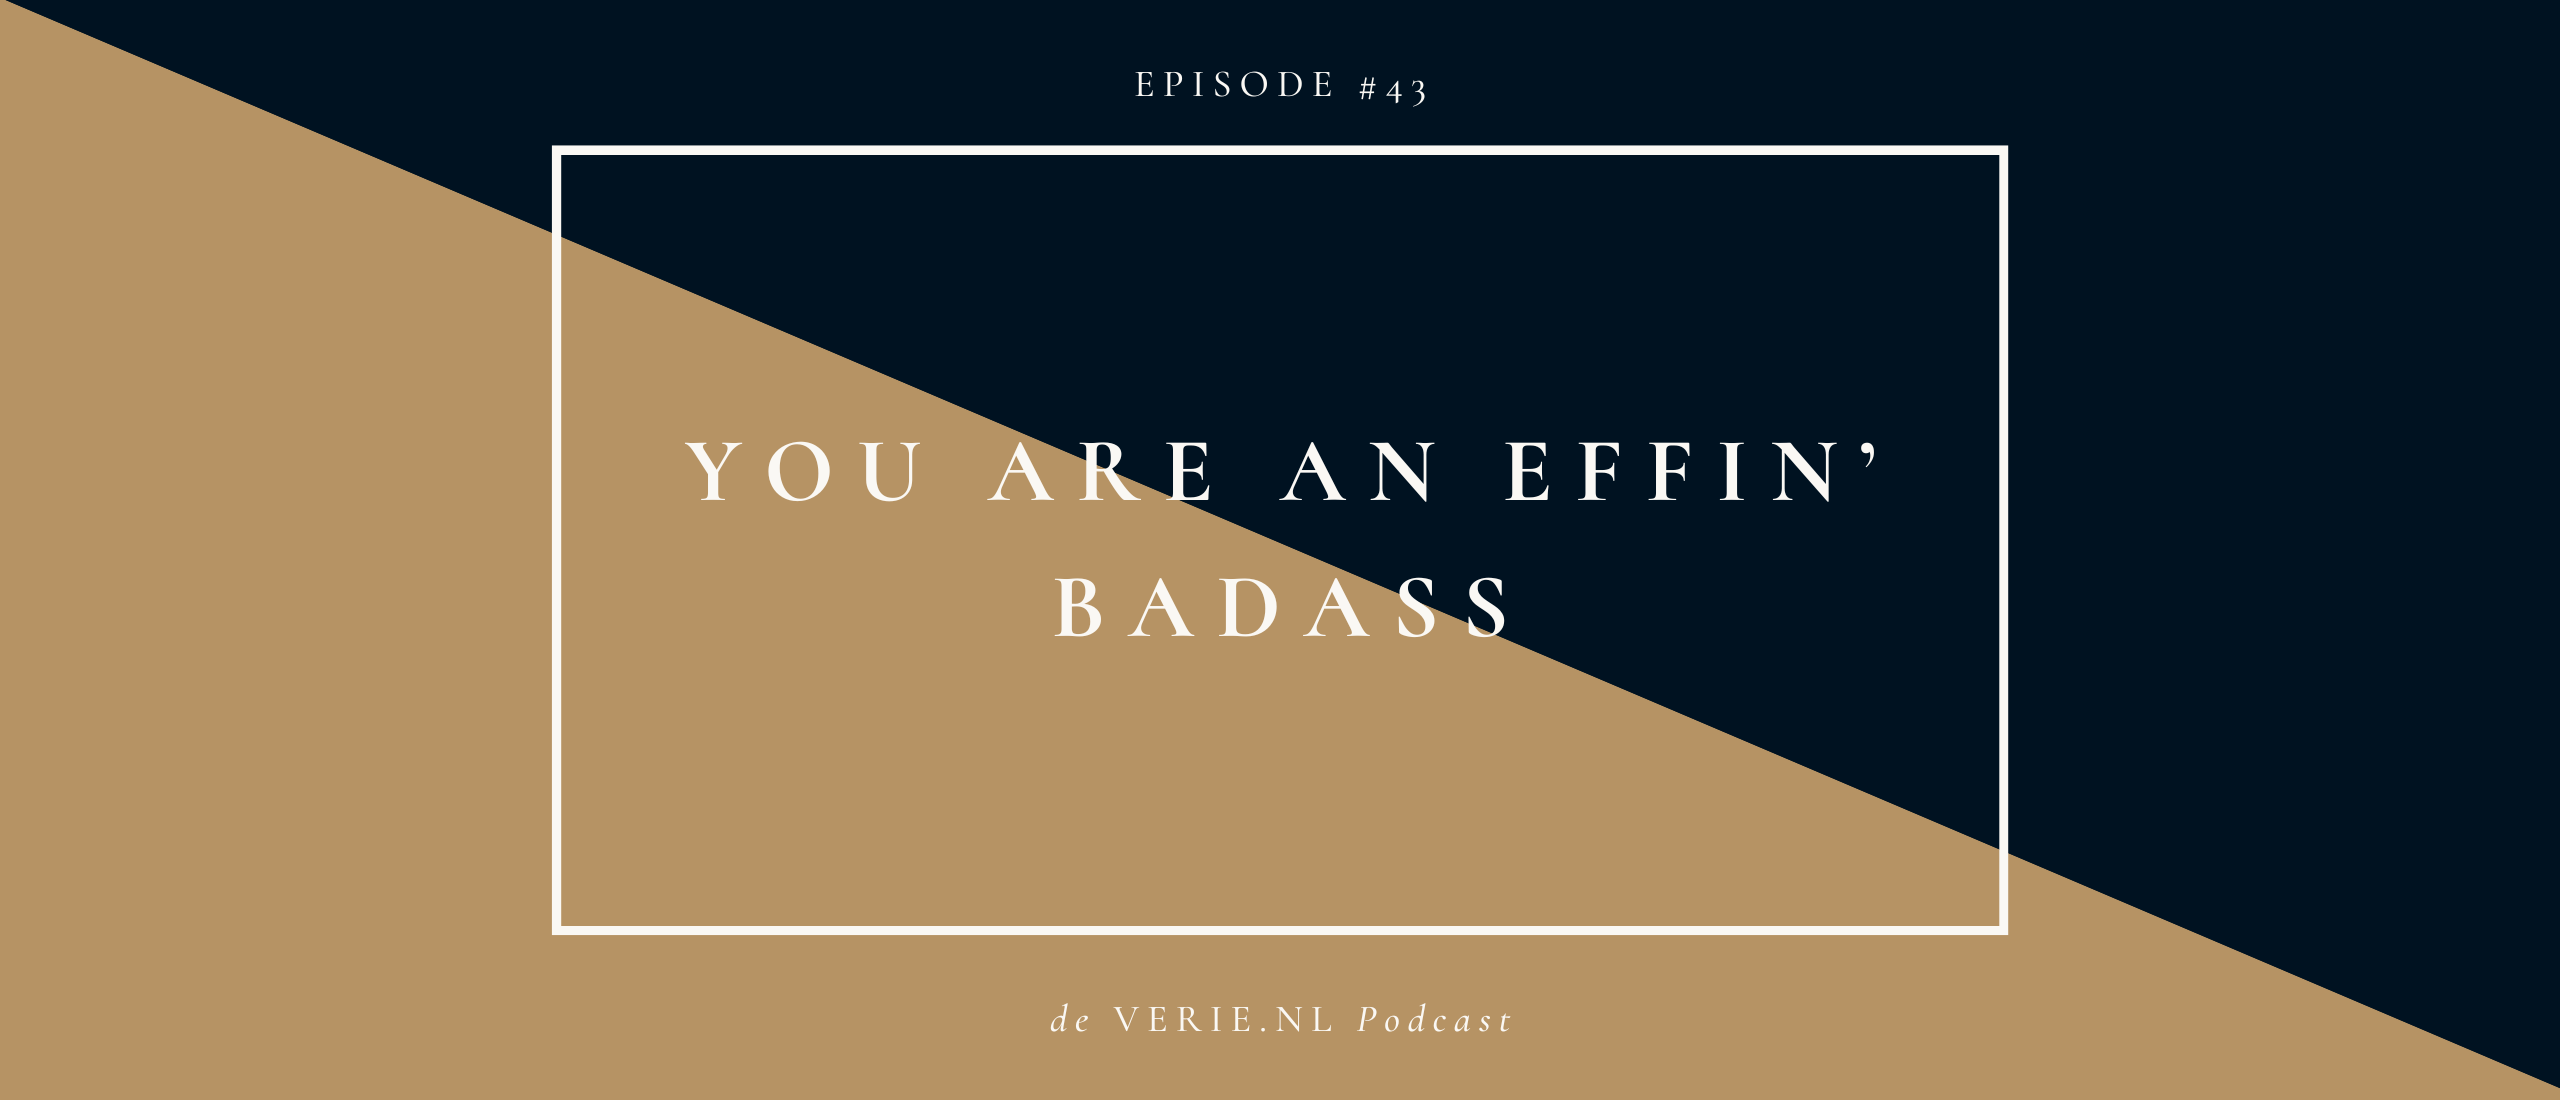 You are an effin’ badass